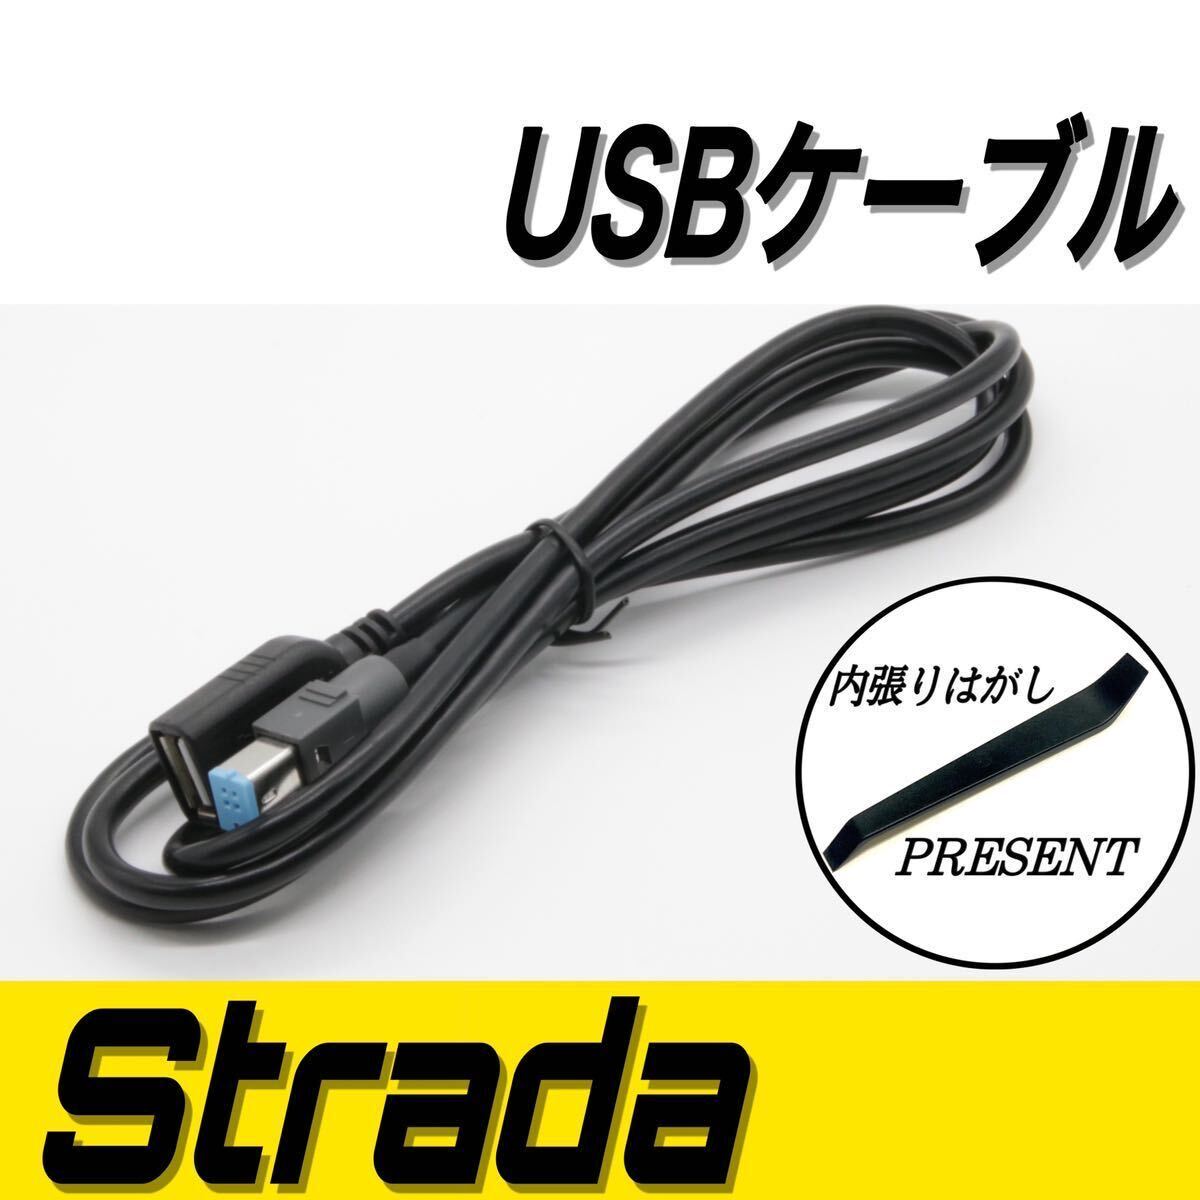  Strada car navigation system CA-LUB200D interchangeable USB charger Panasonic Panasonic iPod connection cable 